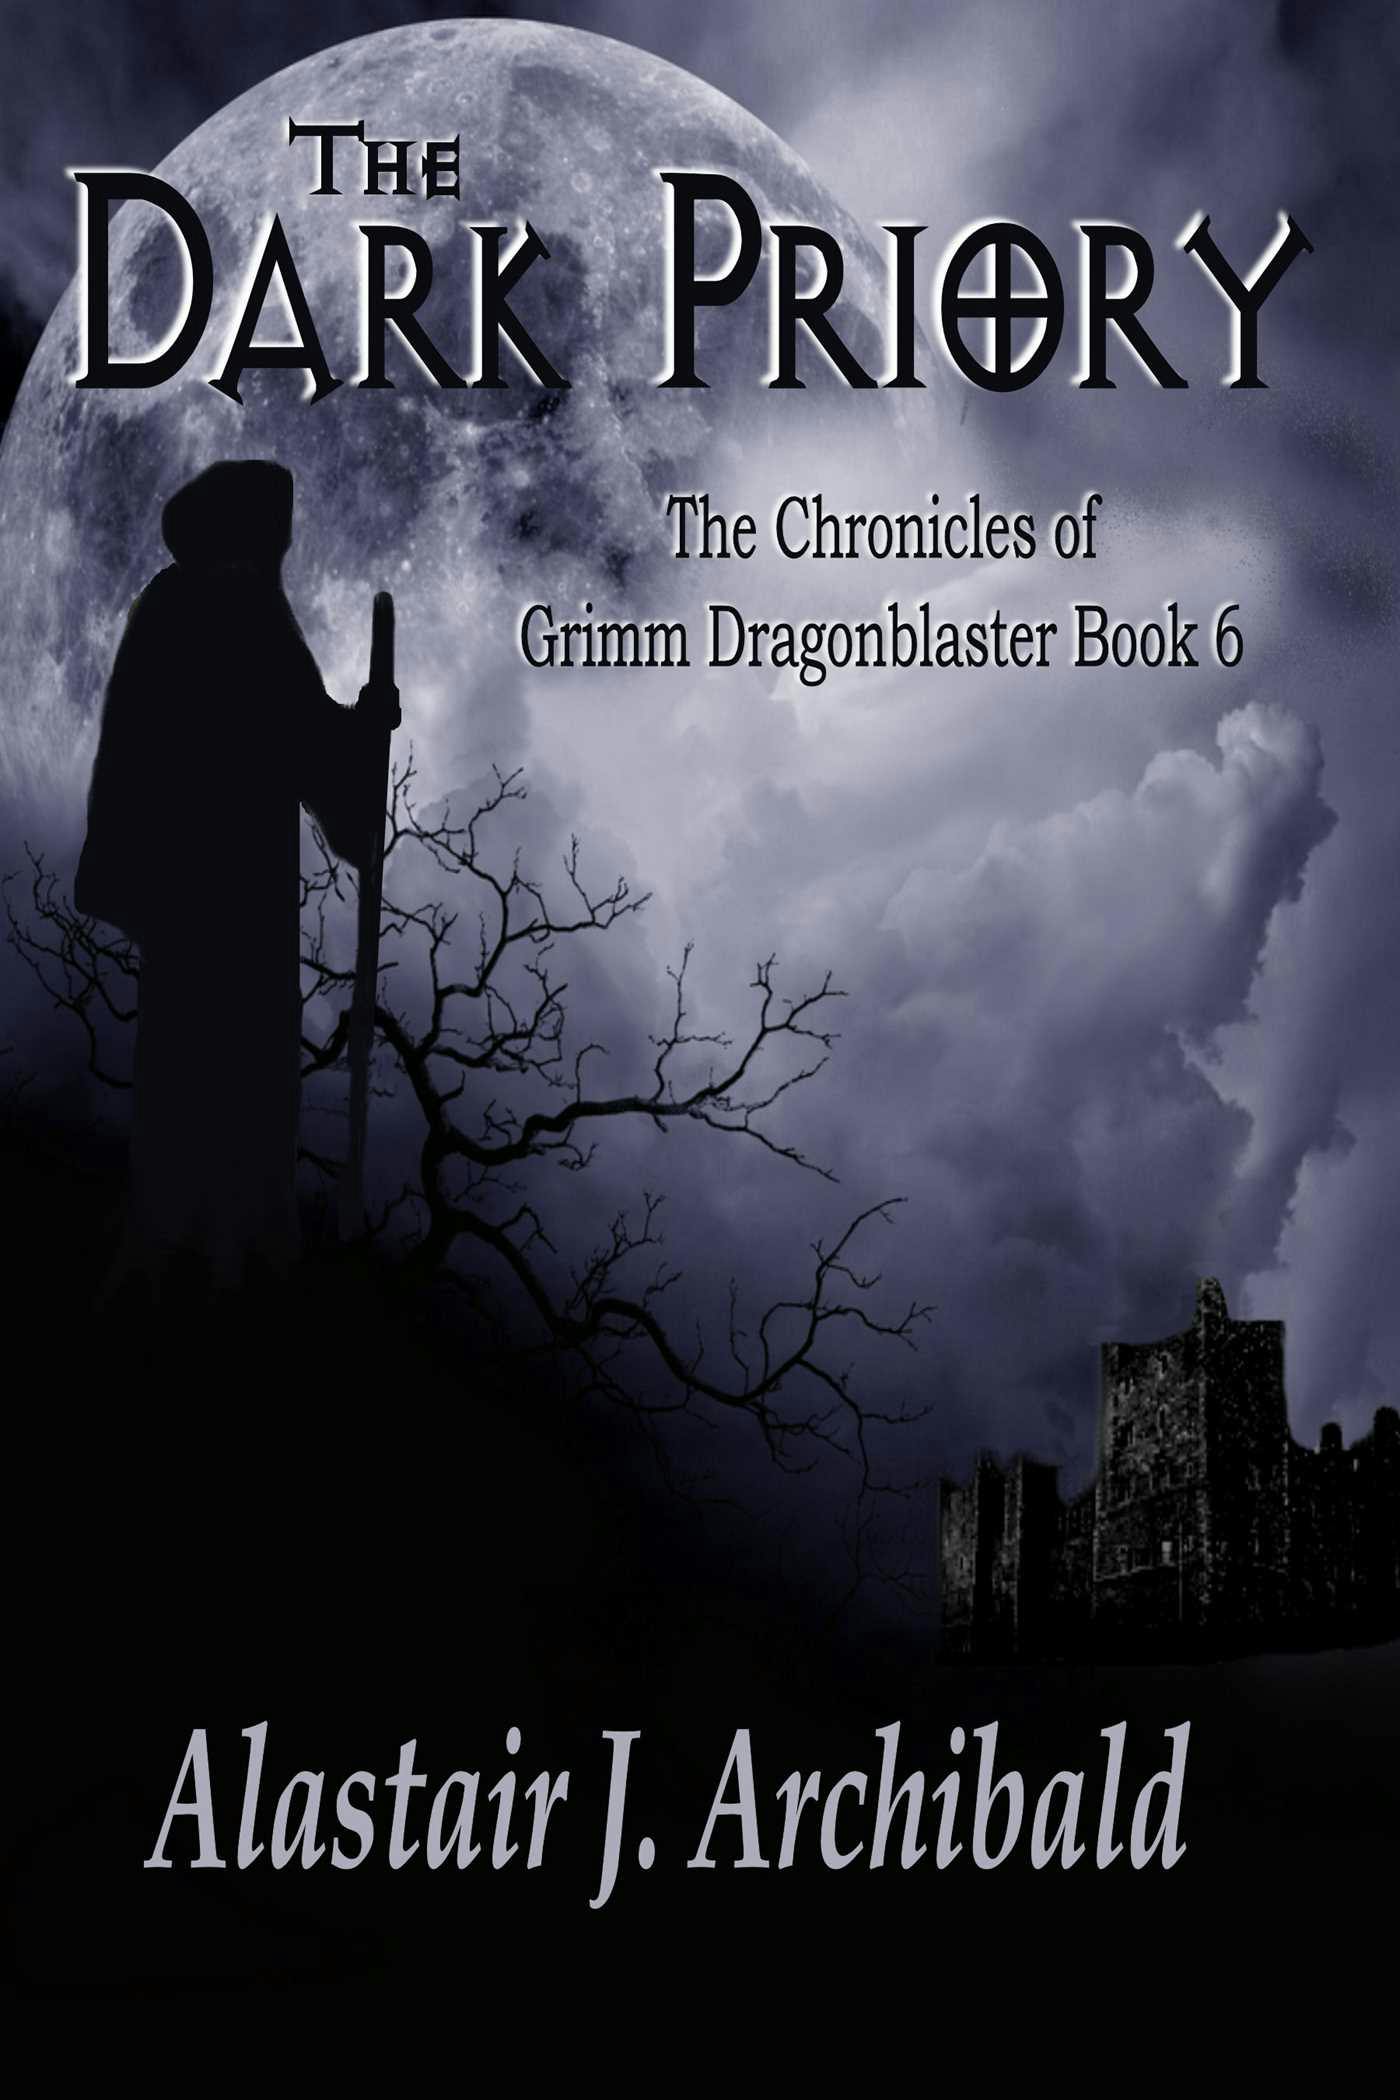 The Dark Priory - Alastair Archibald